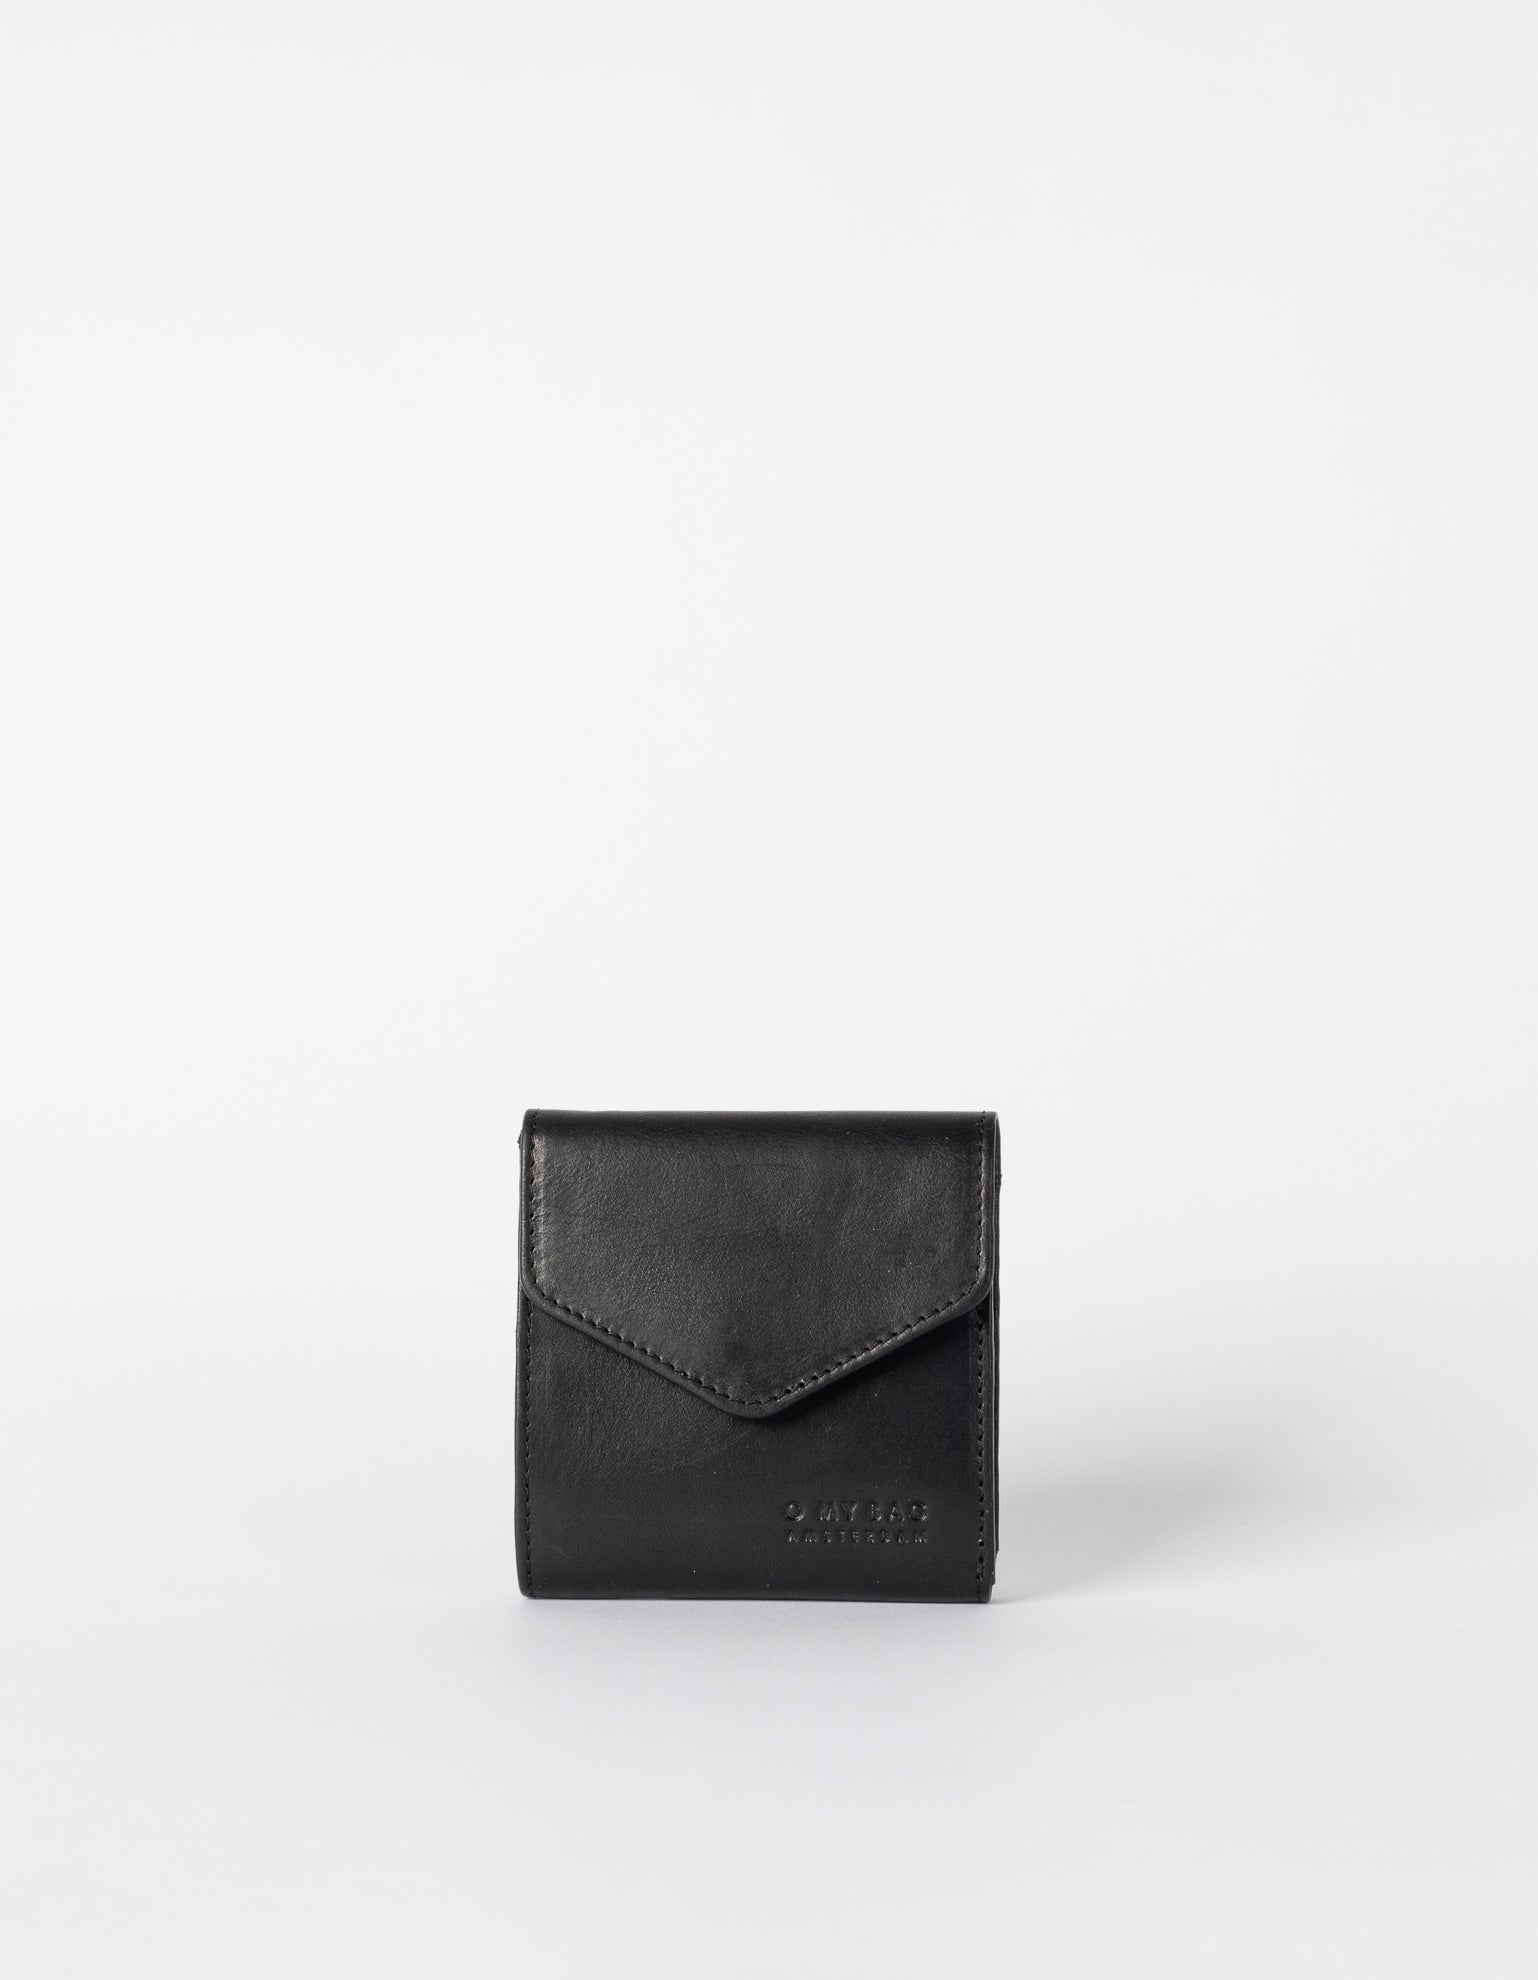 Black wallet. Square Envelope shape. Front product image.